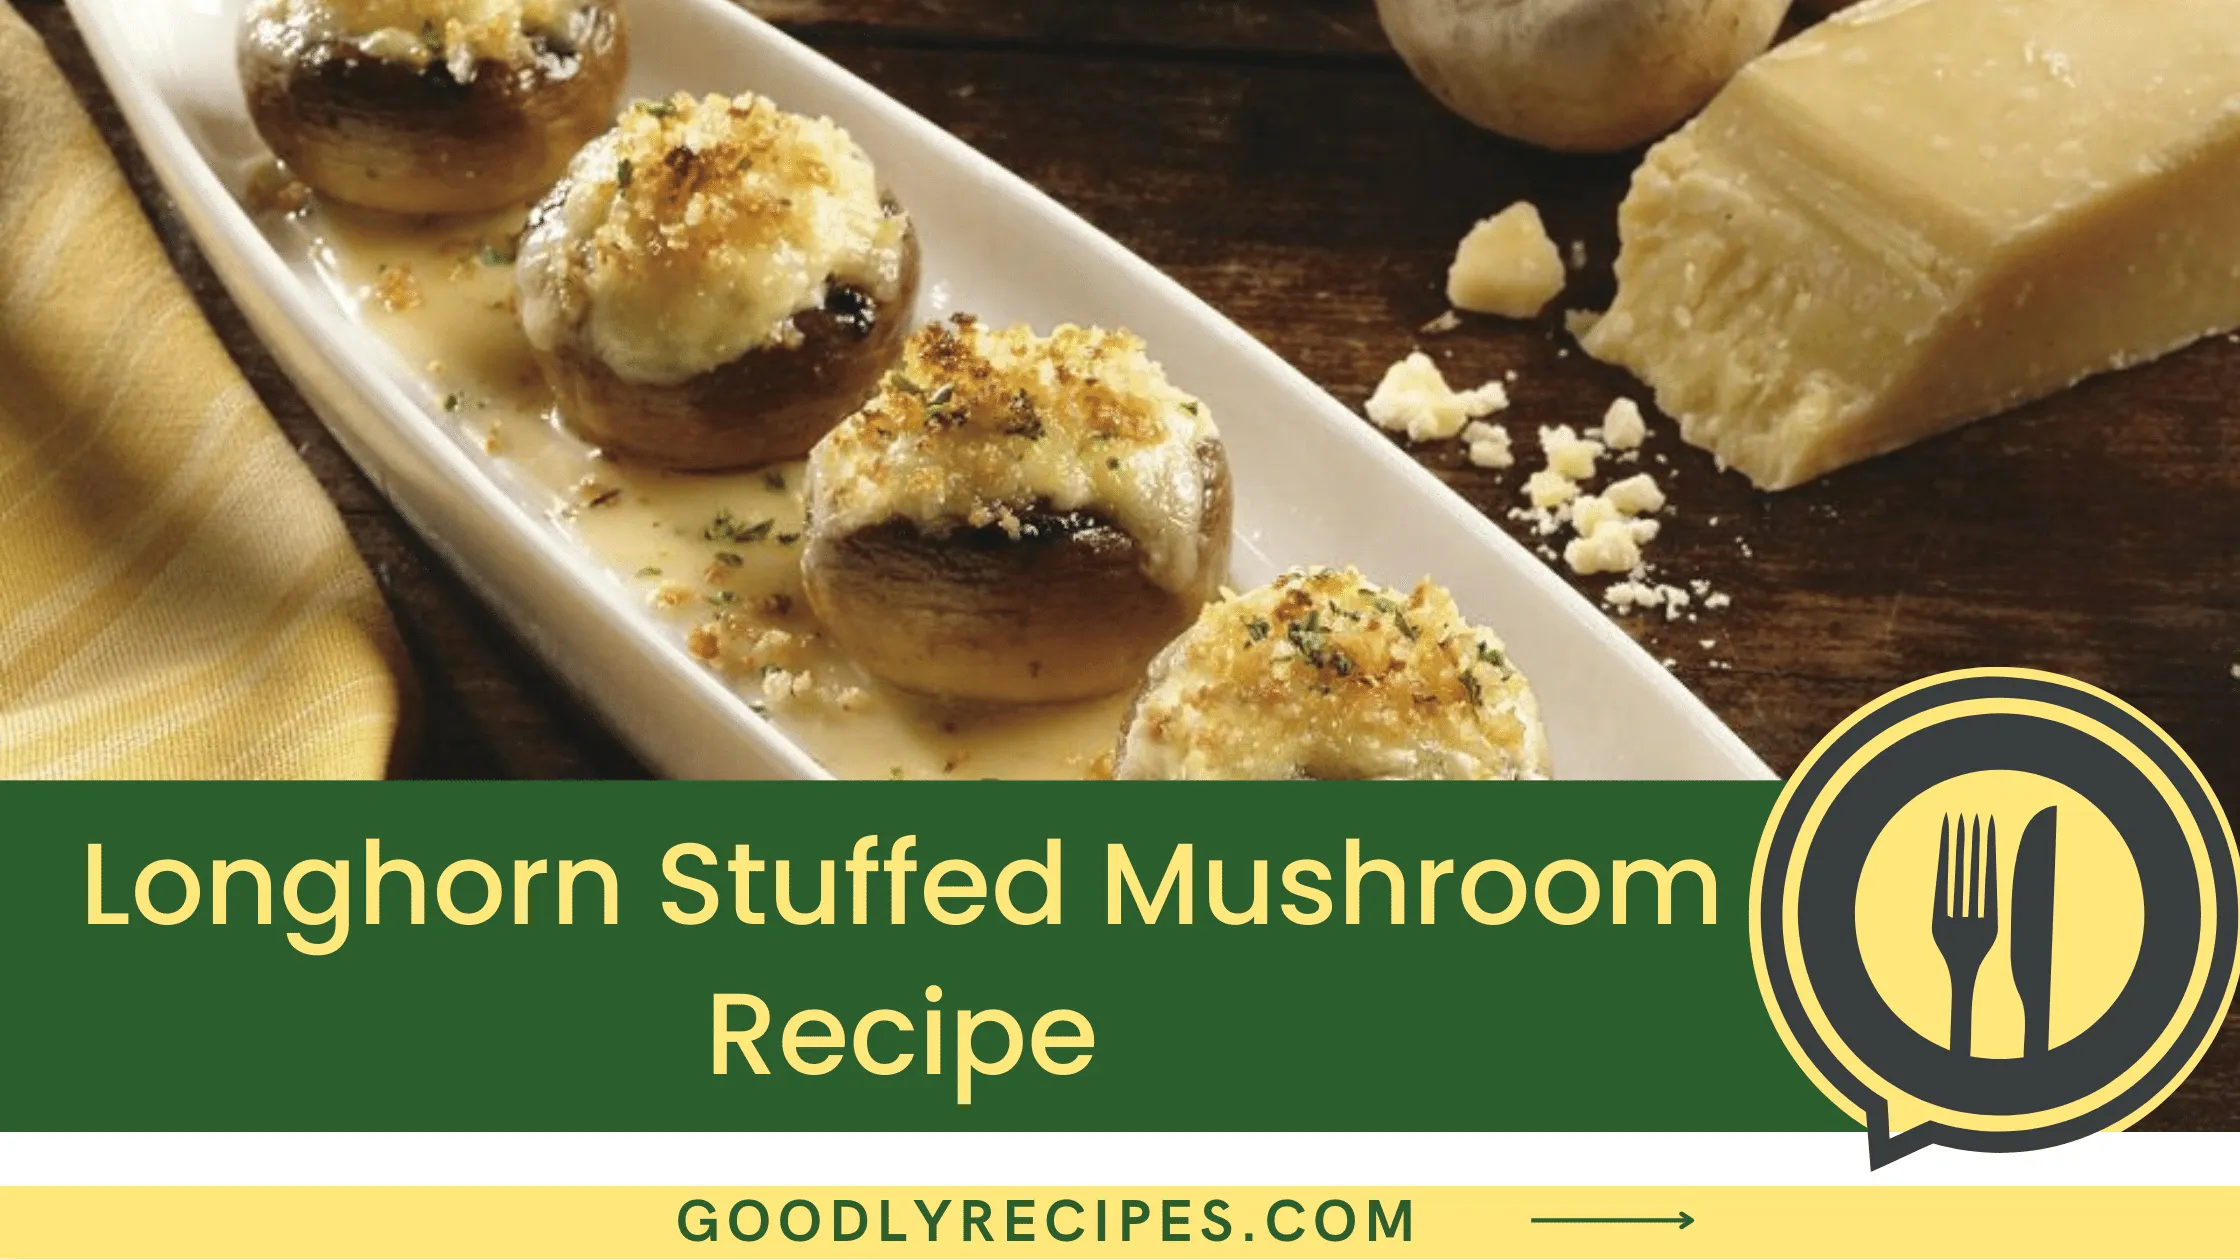 What Is Longhorn Stuffed Mushroom?